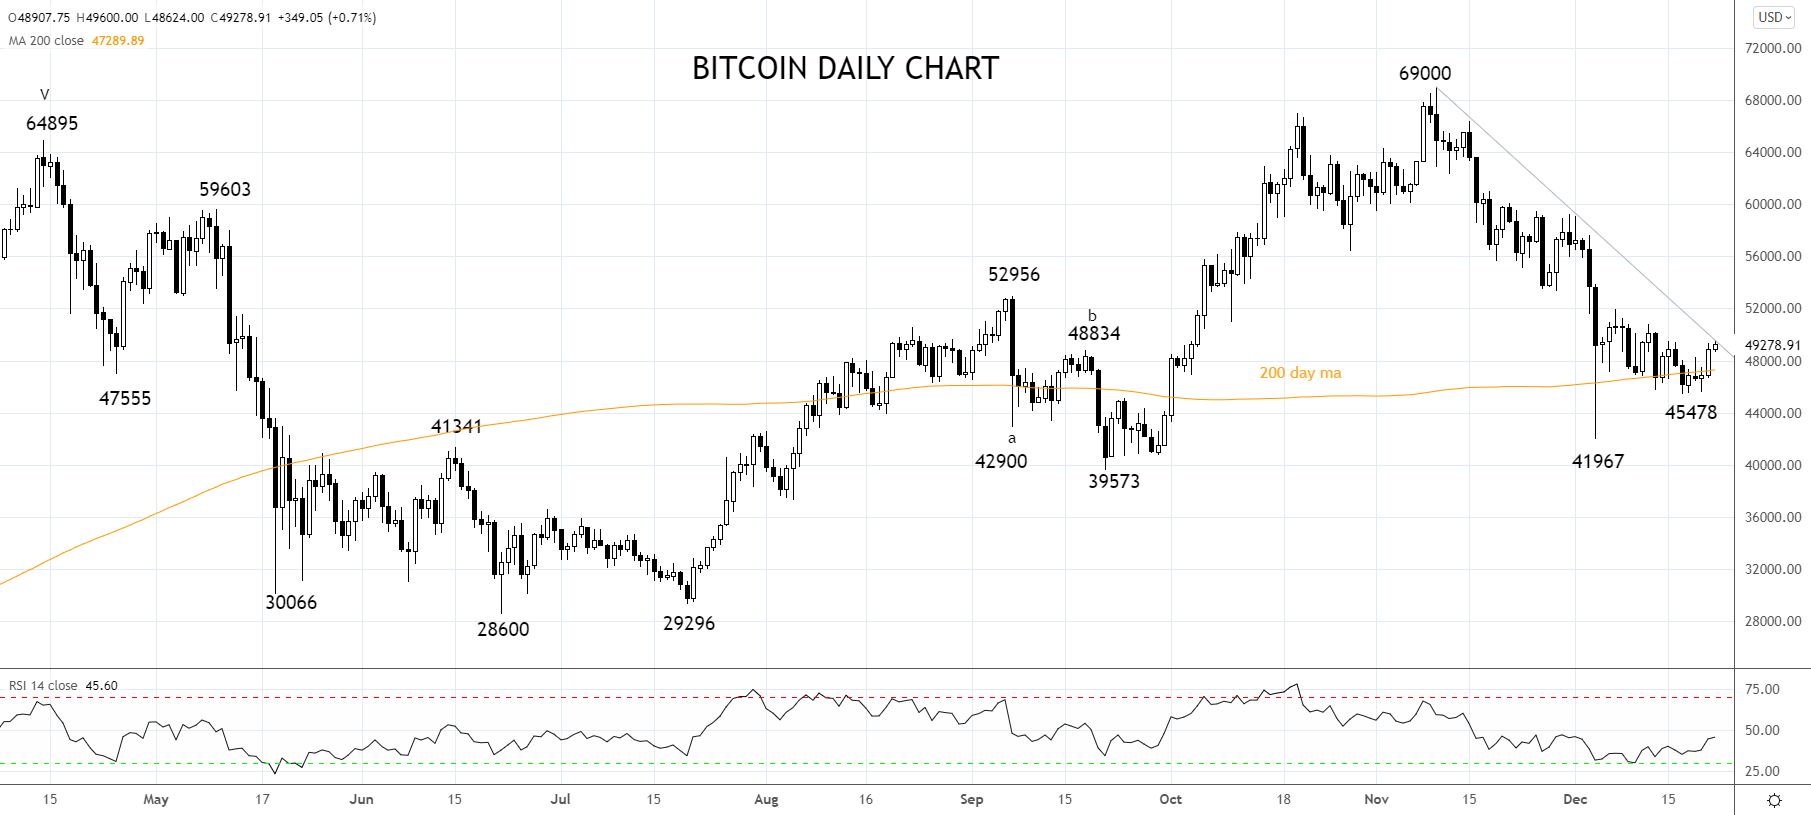 Bitcoin Daily Chart 22nd Dec